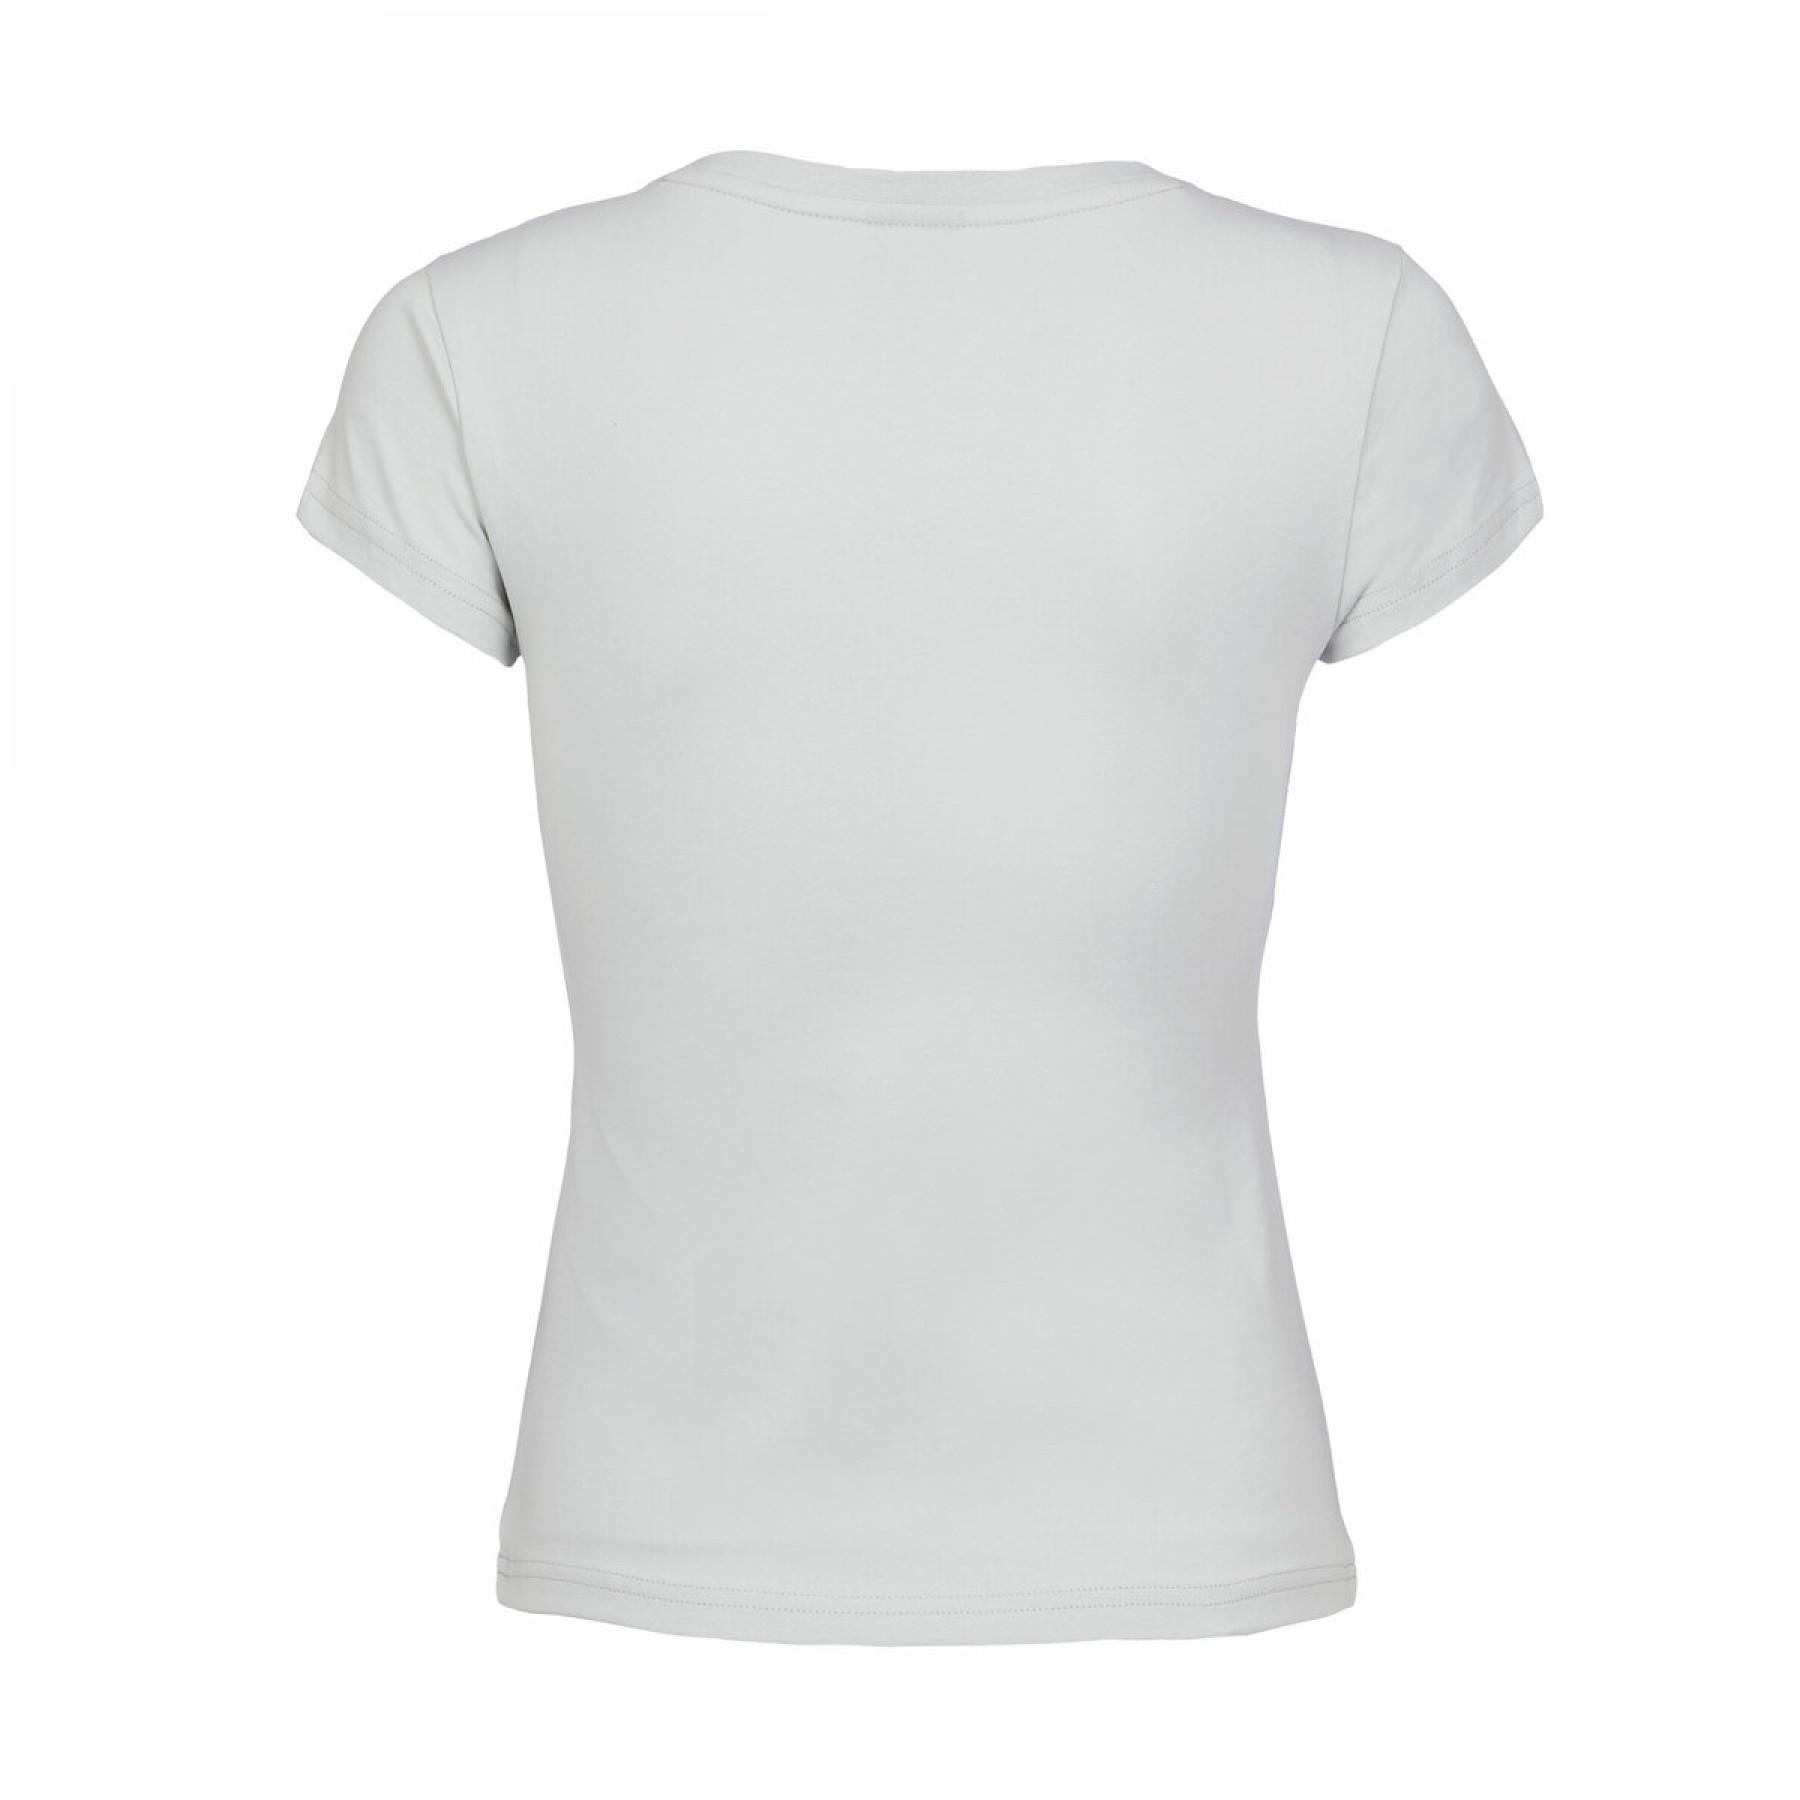 Frauen-T-Shirt Errea essential star